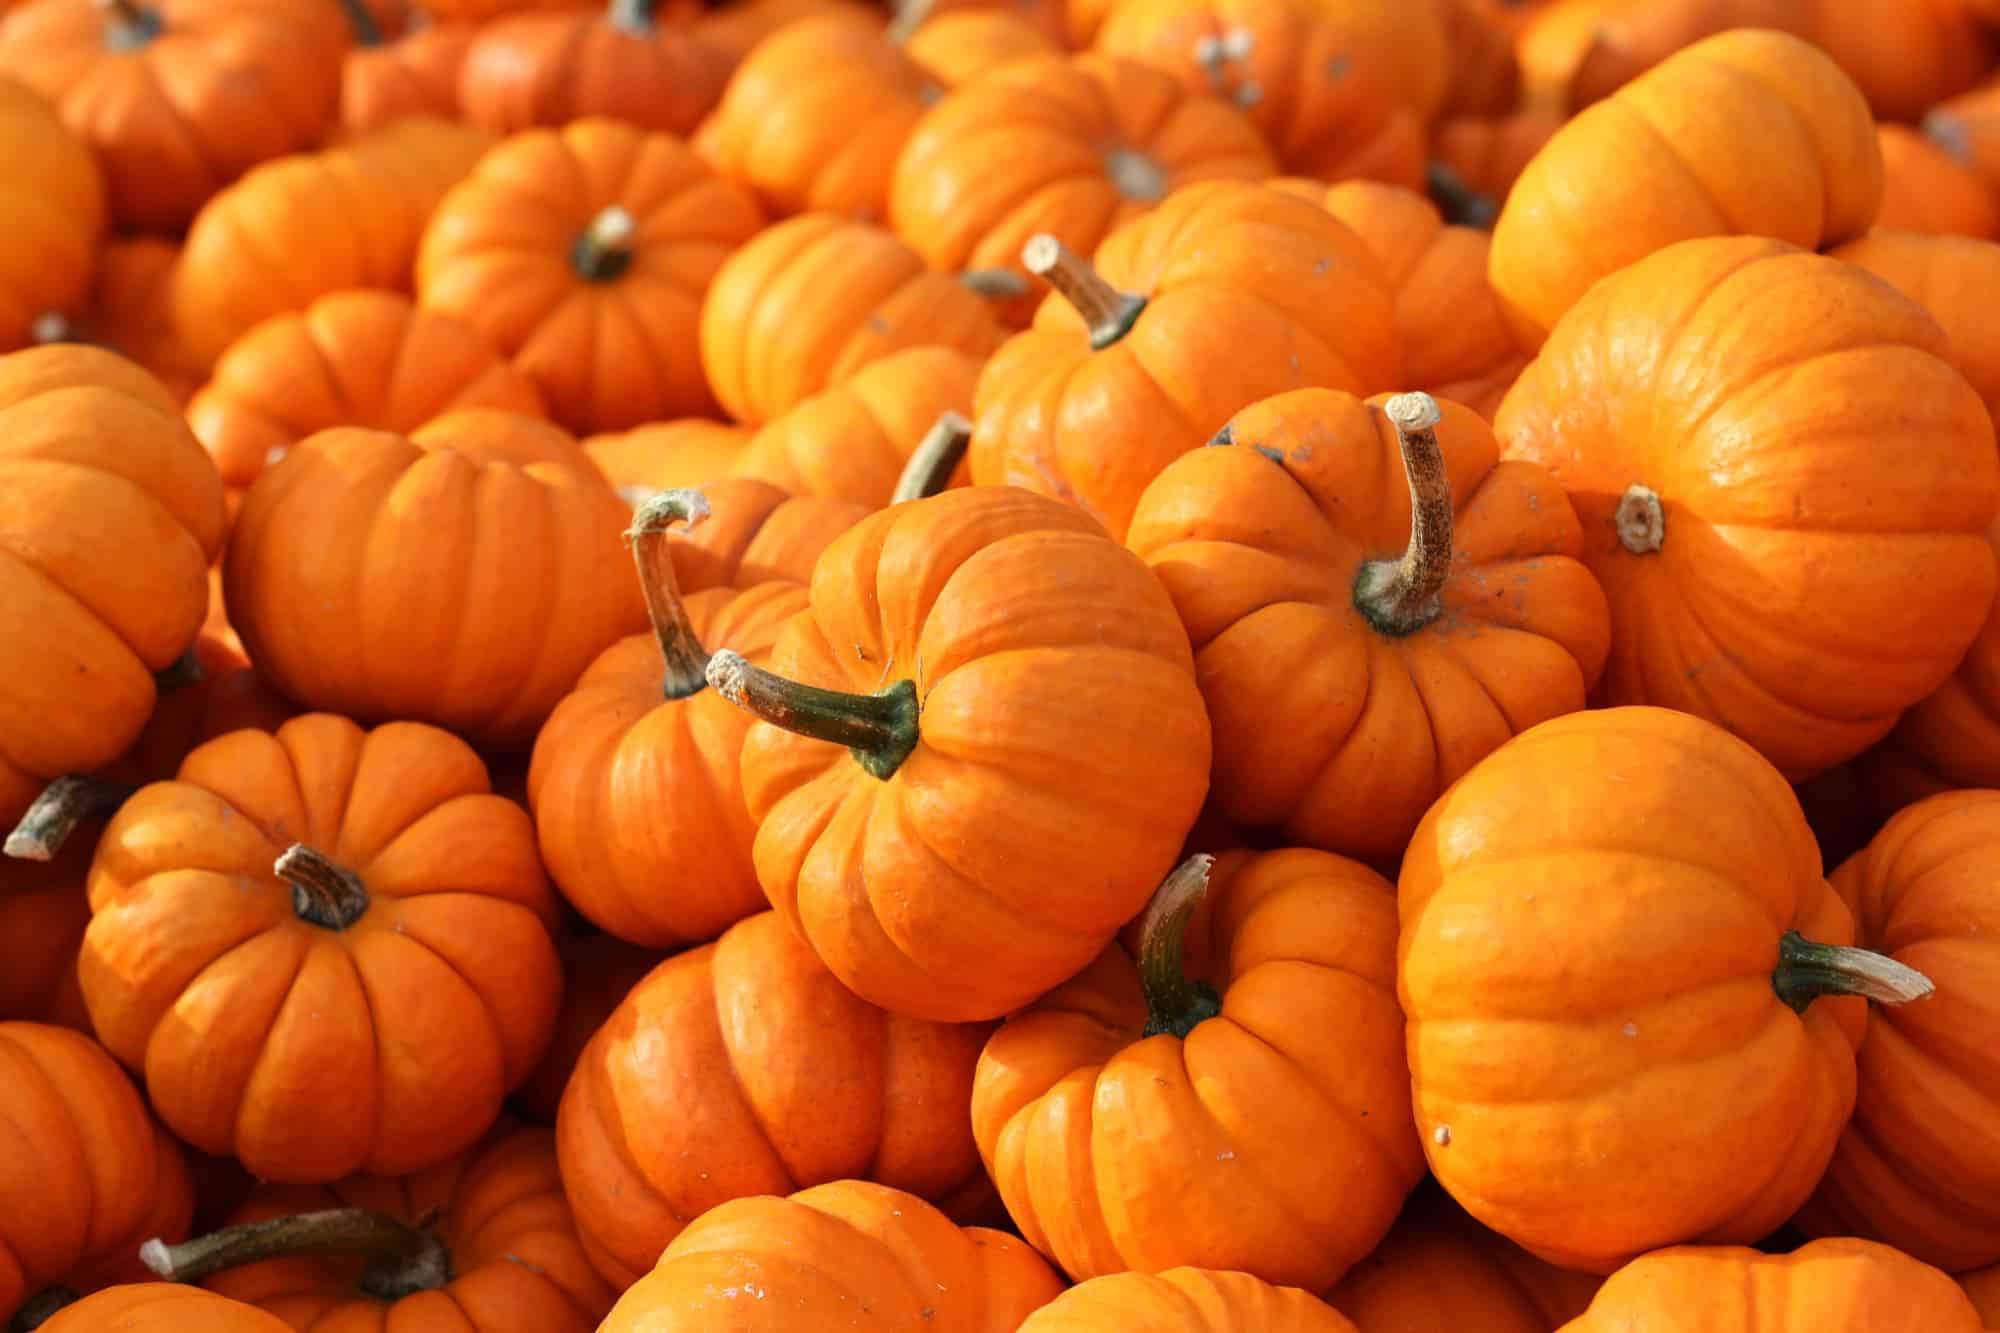 many mini pumpkins